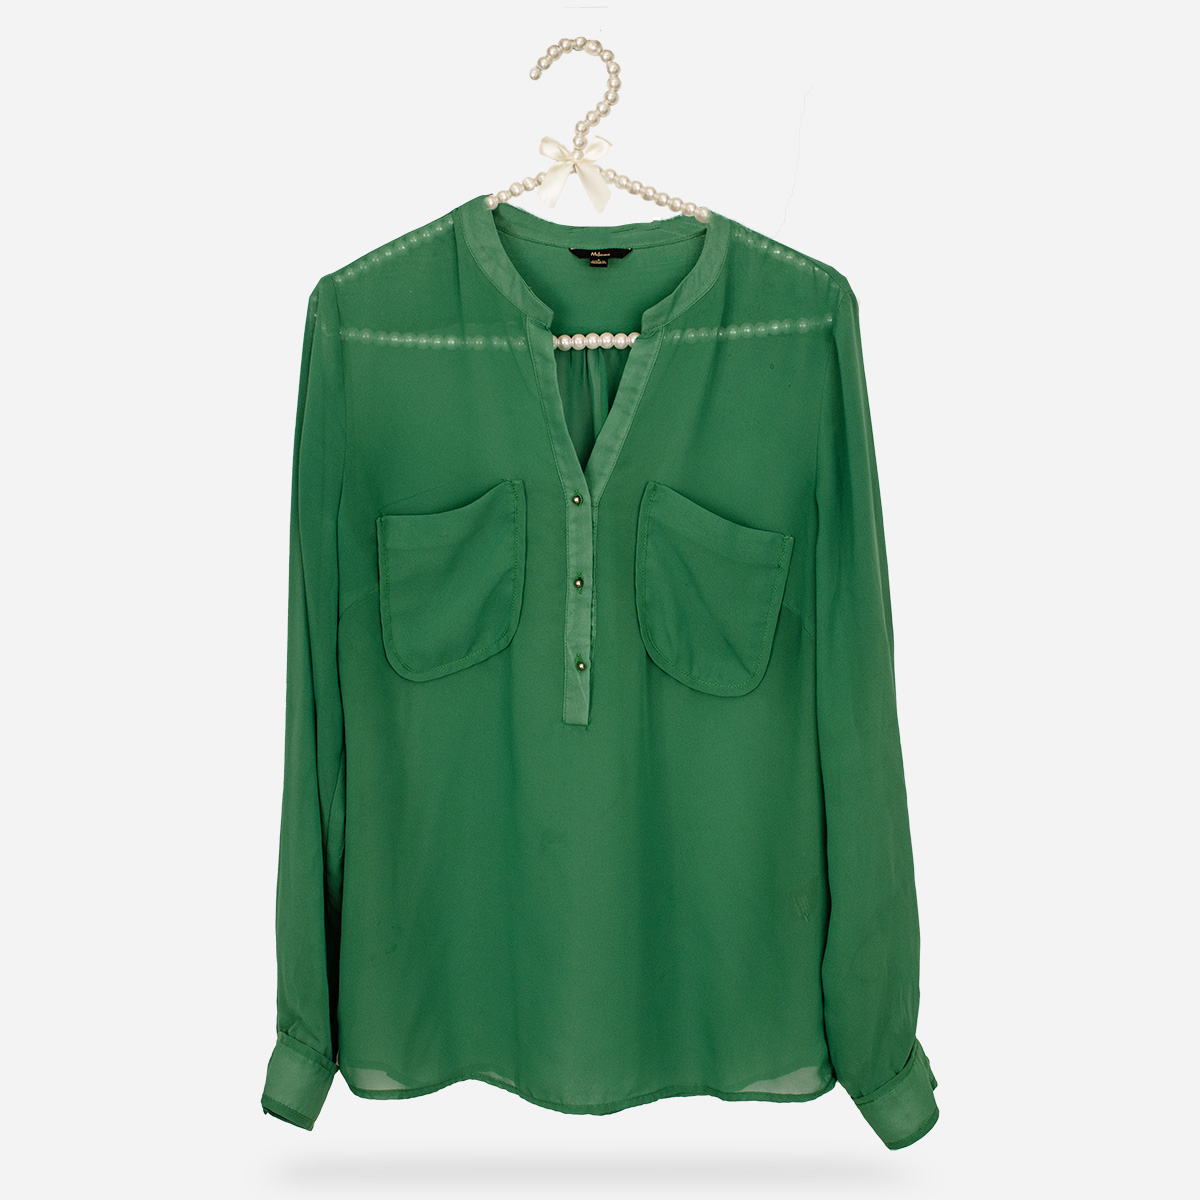 vintage Green blouse